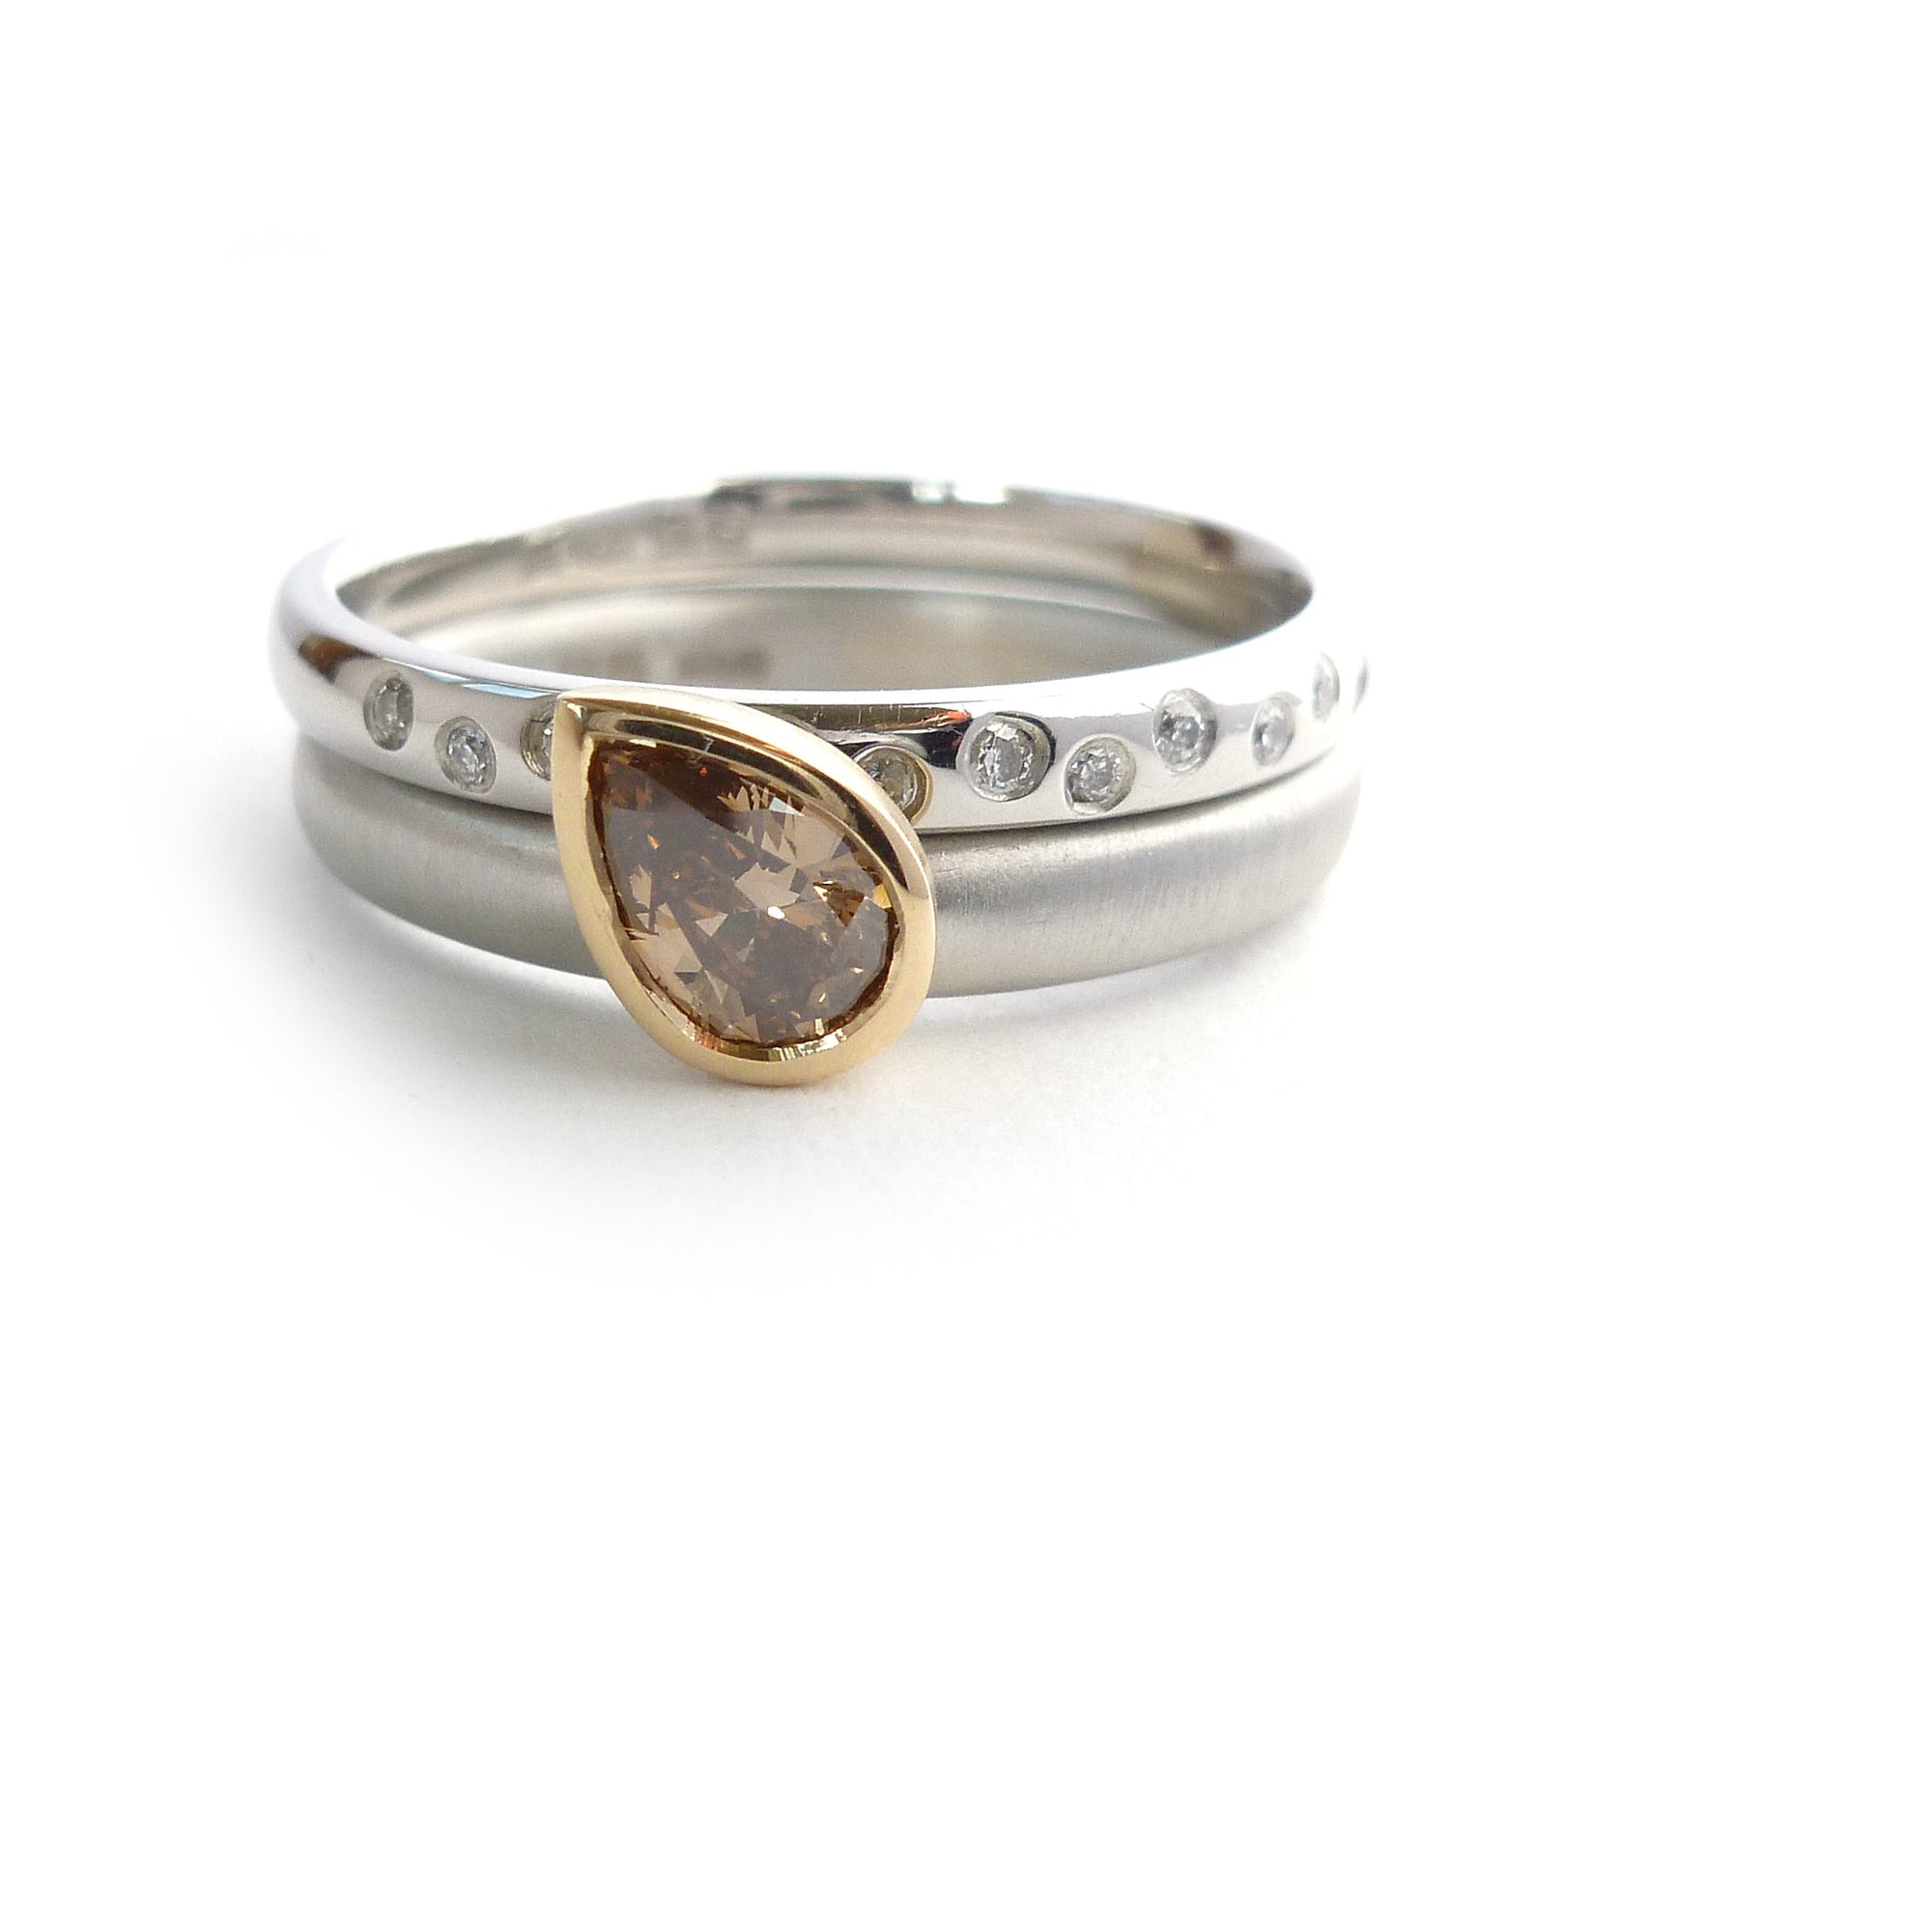 modern simple cognac diamond engagement ring by designer Sue Lane